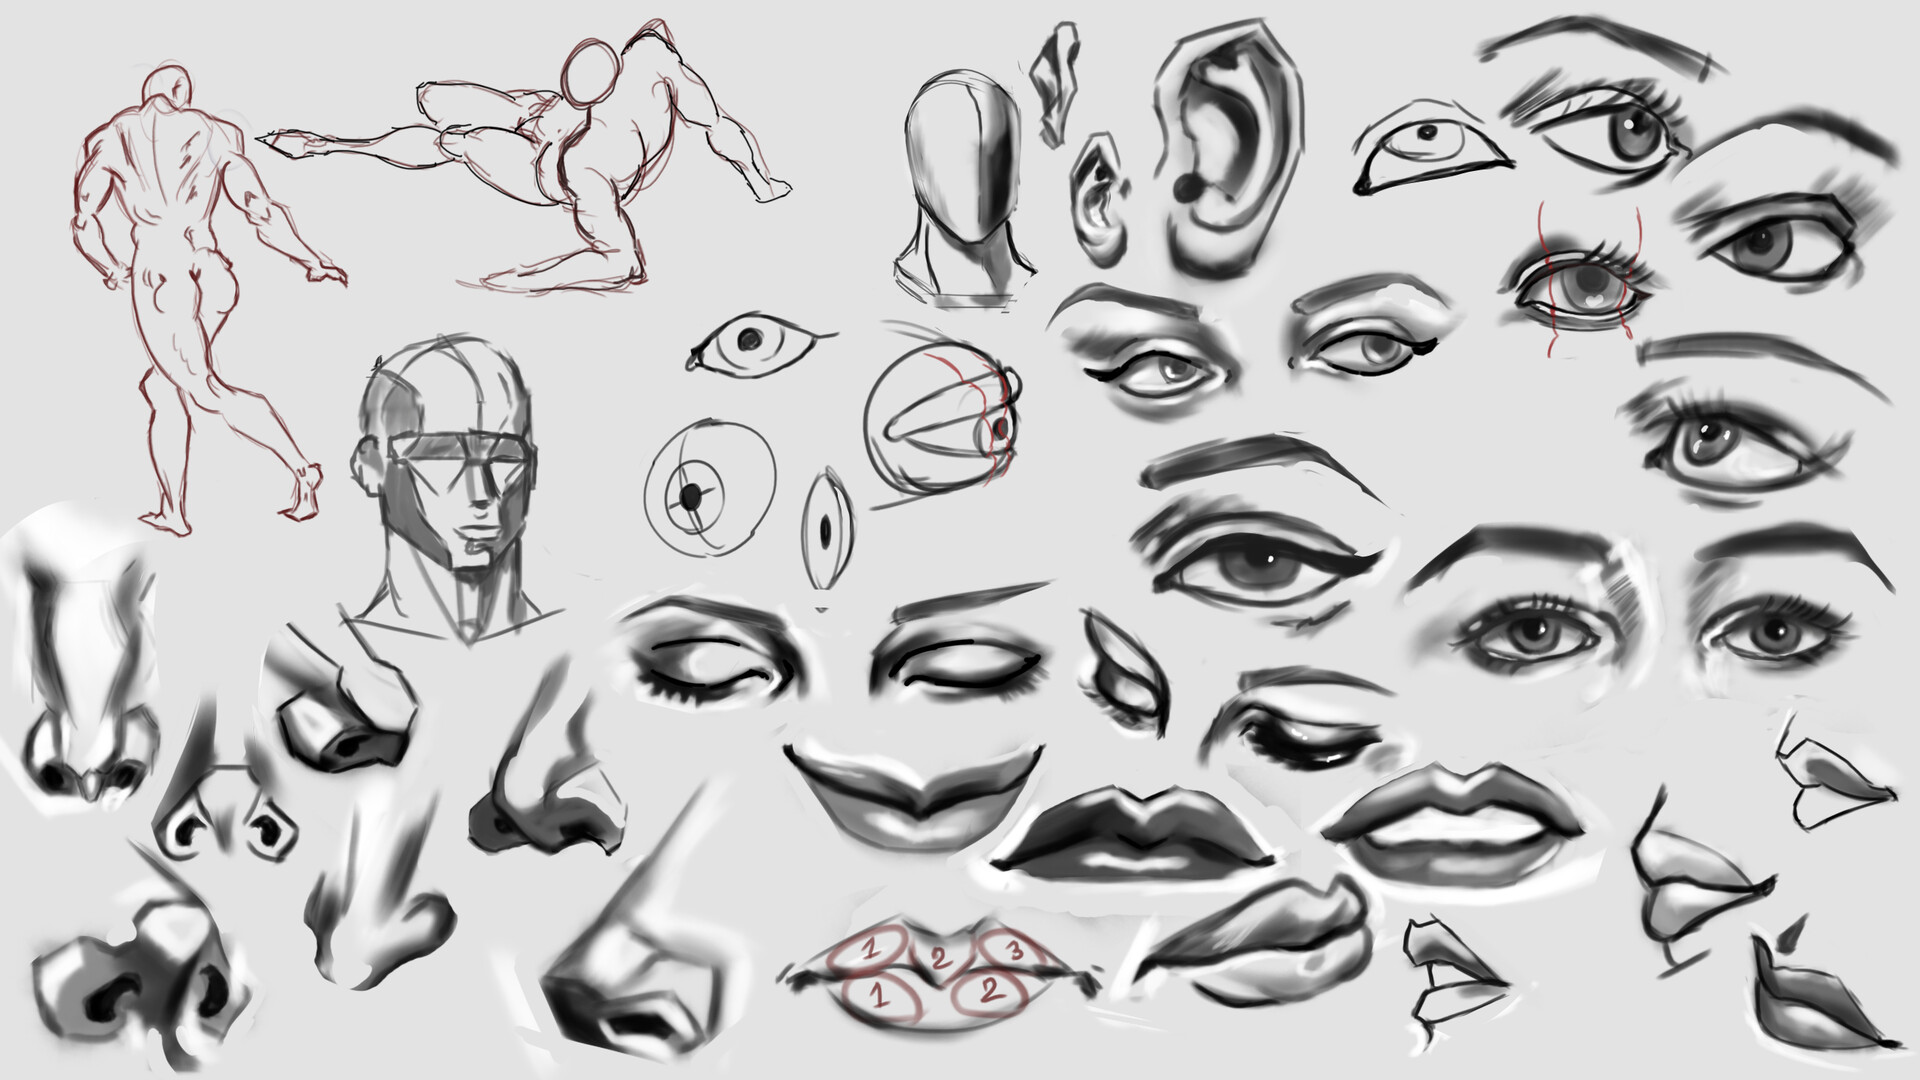 Anas Karimo - Head and Facial features studies